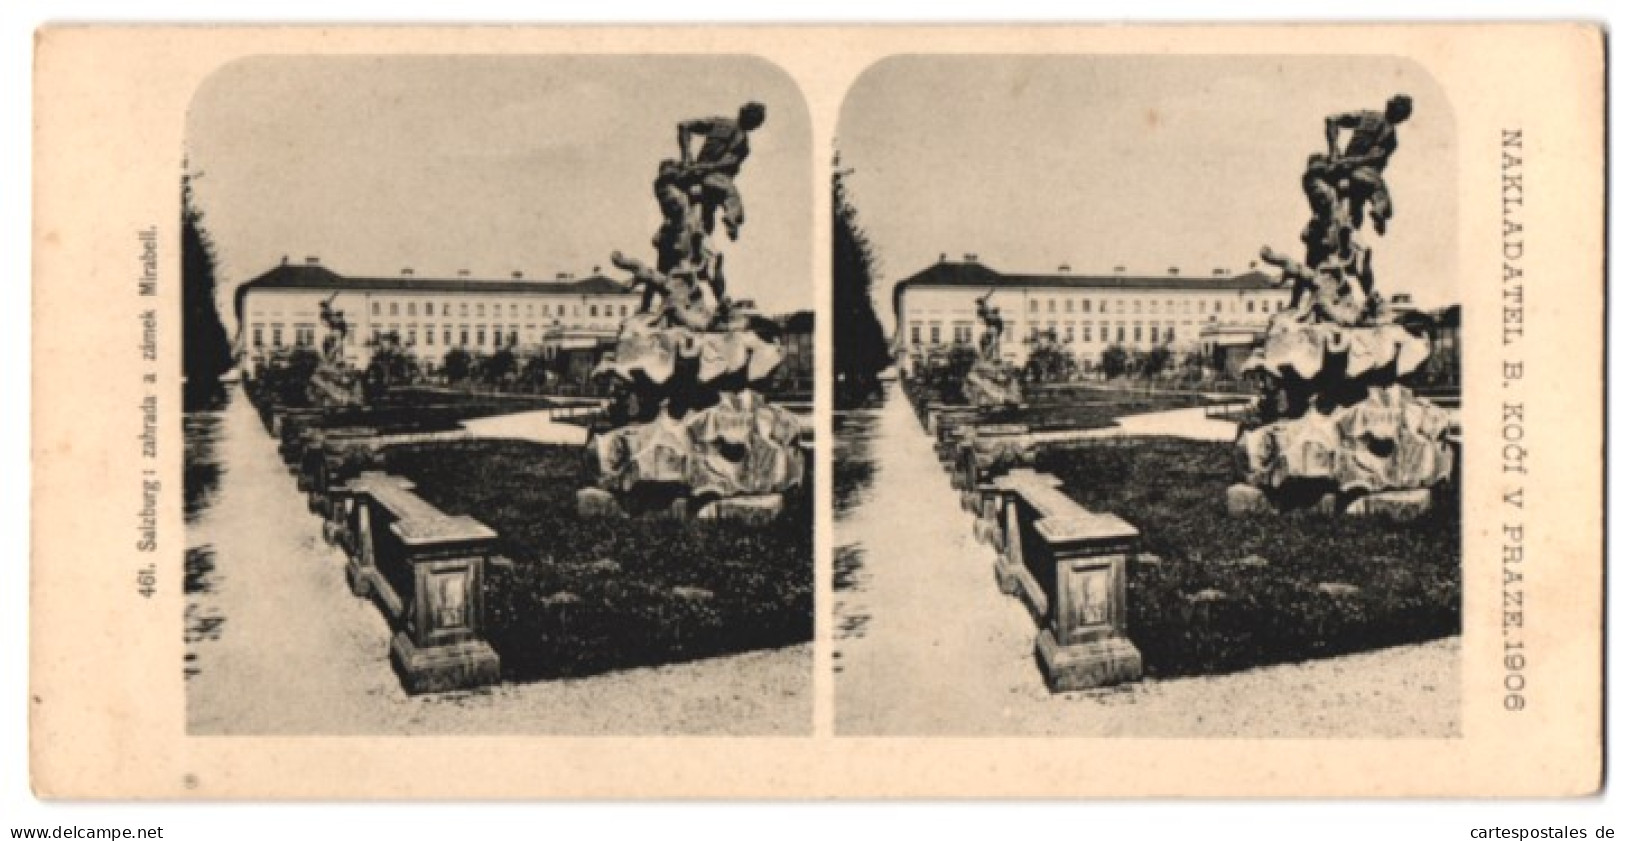 Stereo-Fotografie Lichtdruck Bedrich Koci, Prag, Ansicht Salzburg, Schloss Mirabell, Statue Im Schlosspark  - Stereoscopic